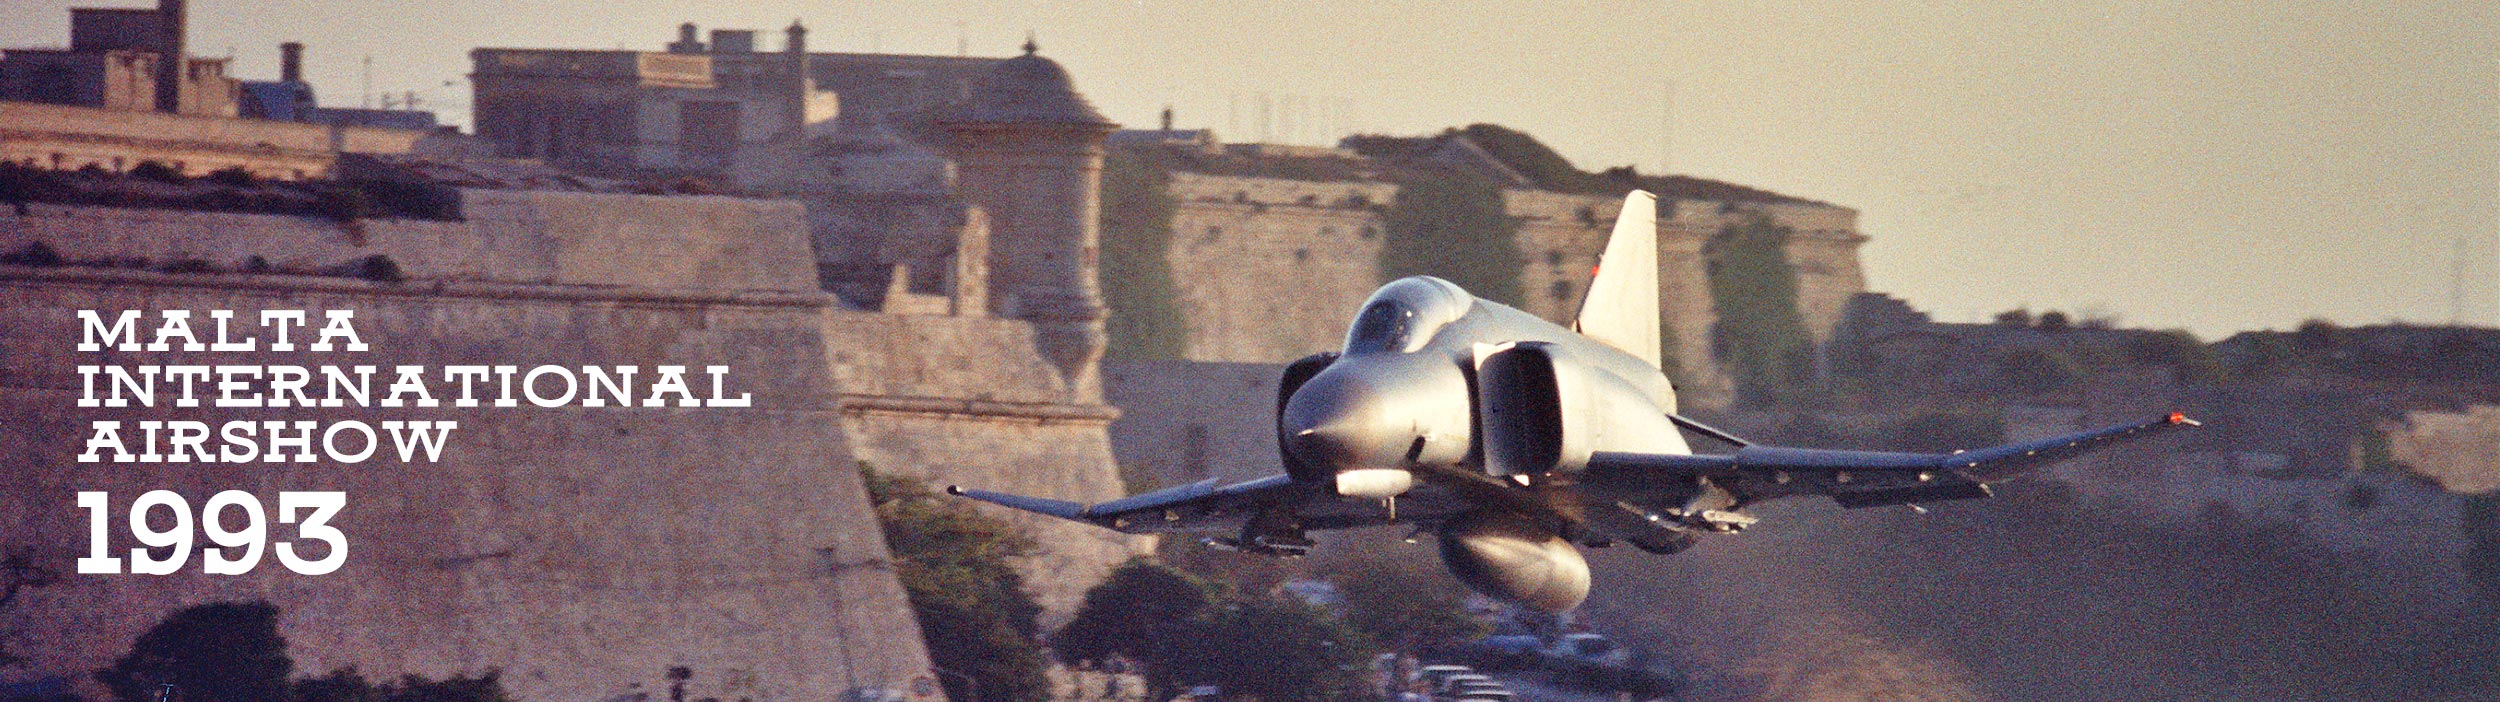 Malta International Airshow 1993